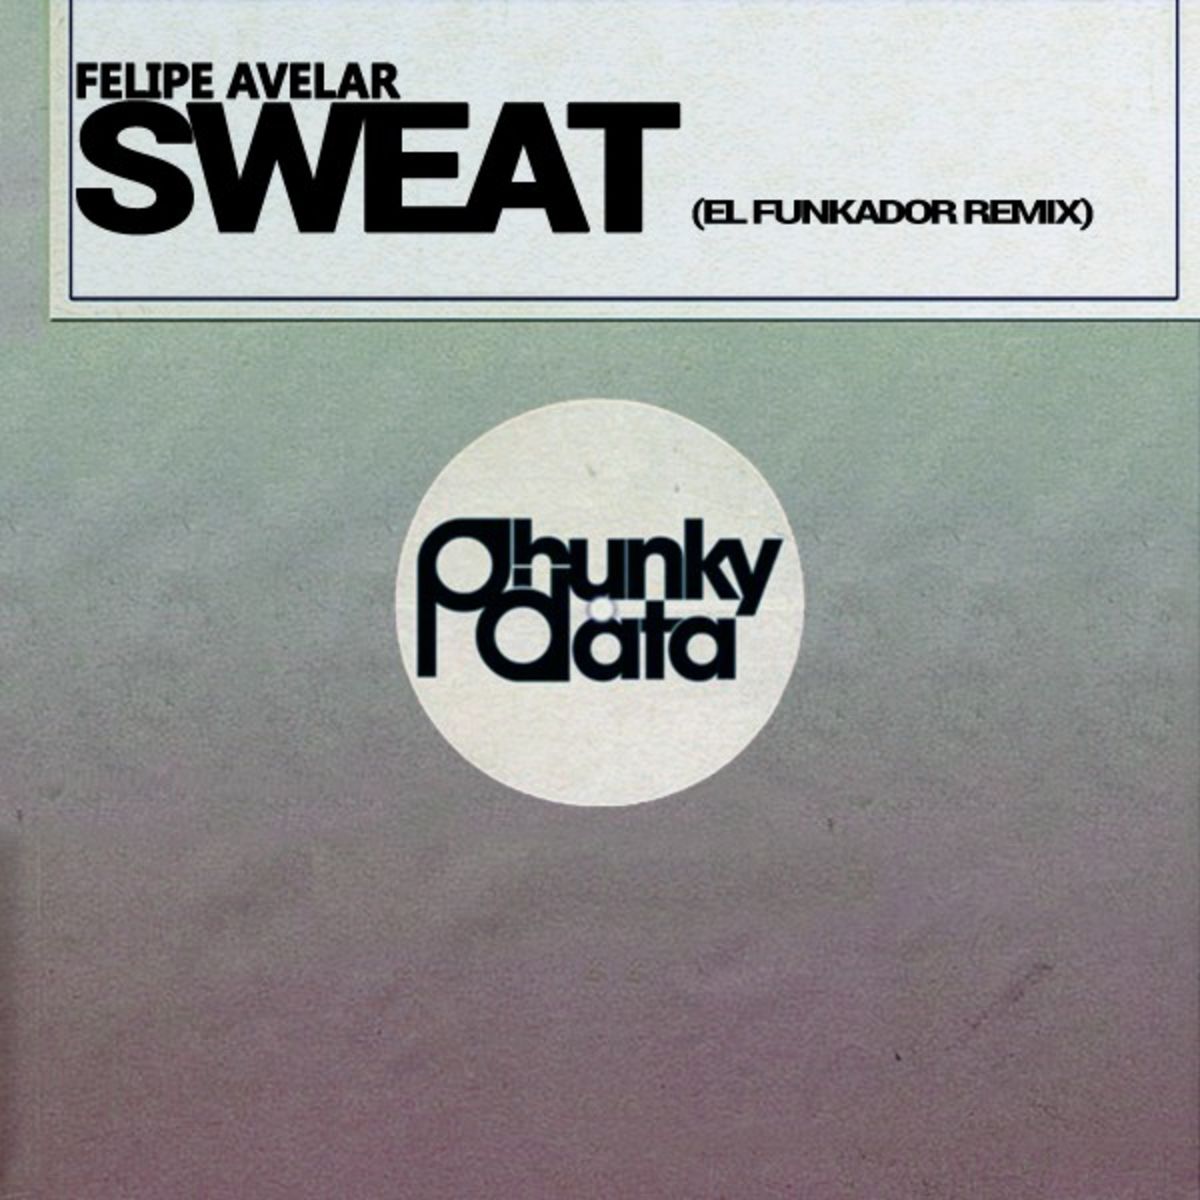 Felipe Avelar - Sweat (El Funkador Remix) / Phunky Data